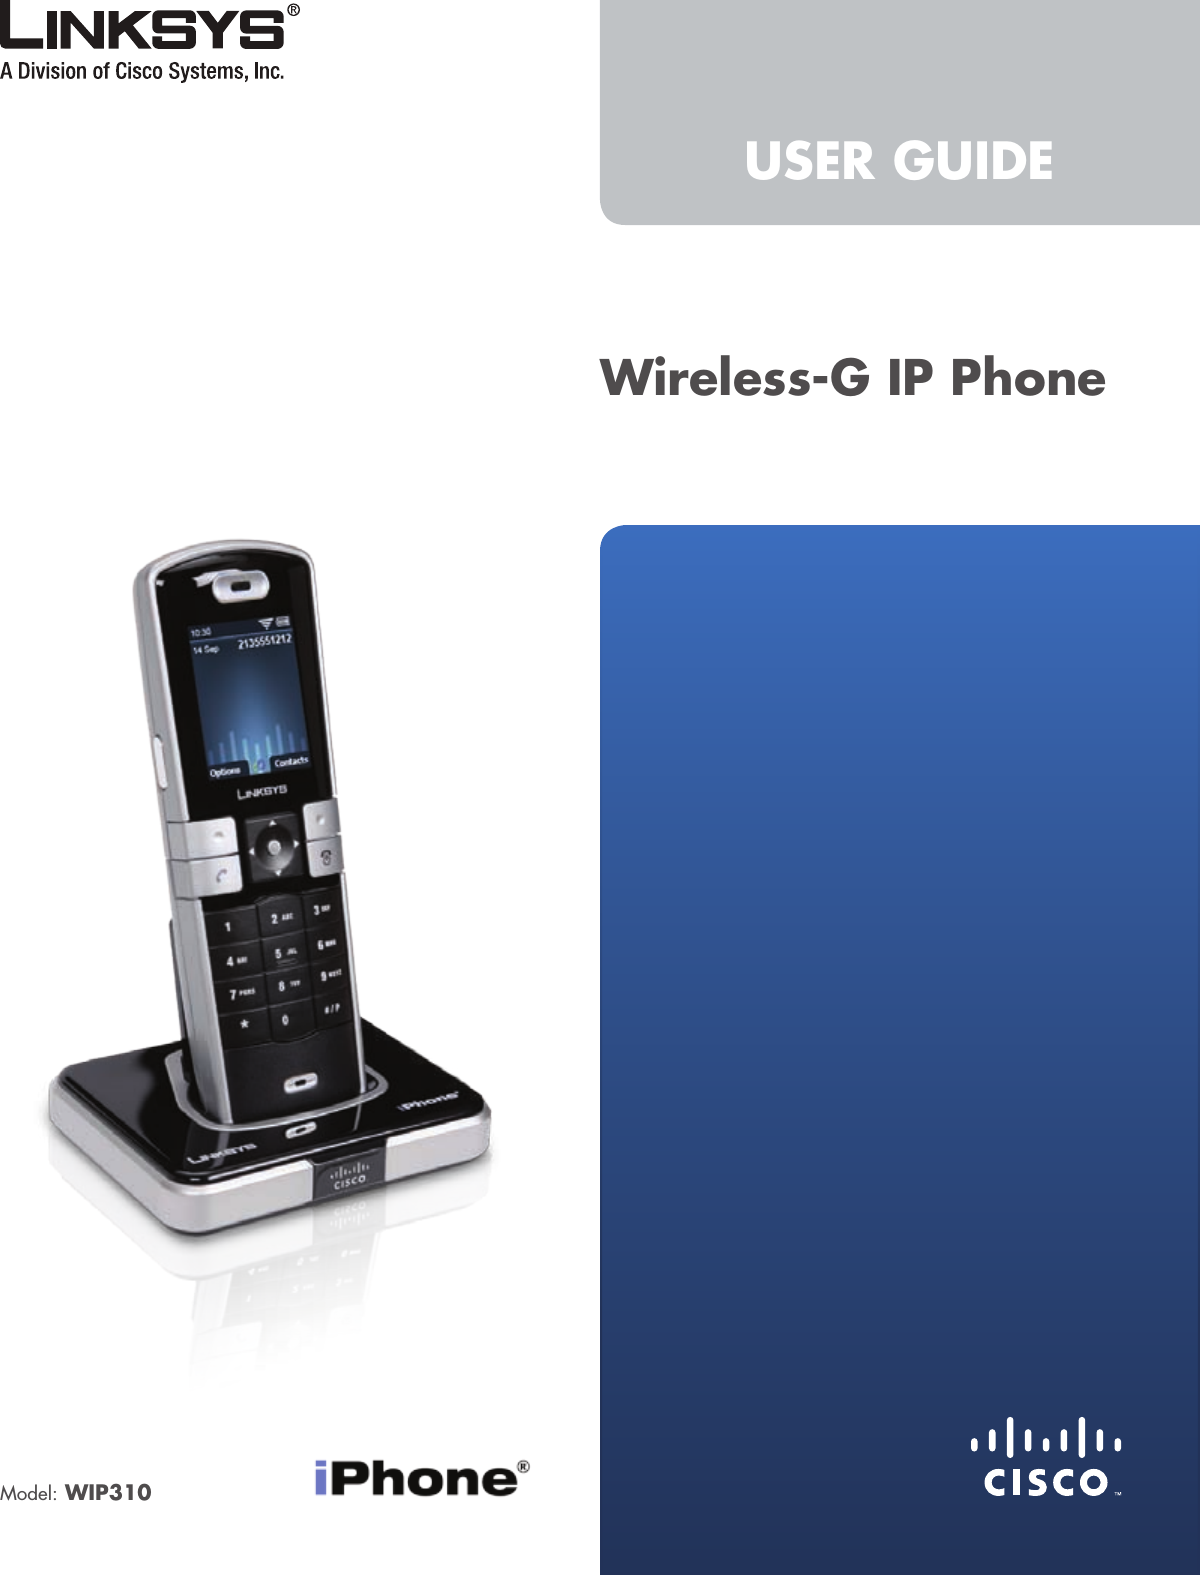 USER GUIDEWireless-G IP PhoneModel: WIP310